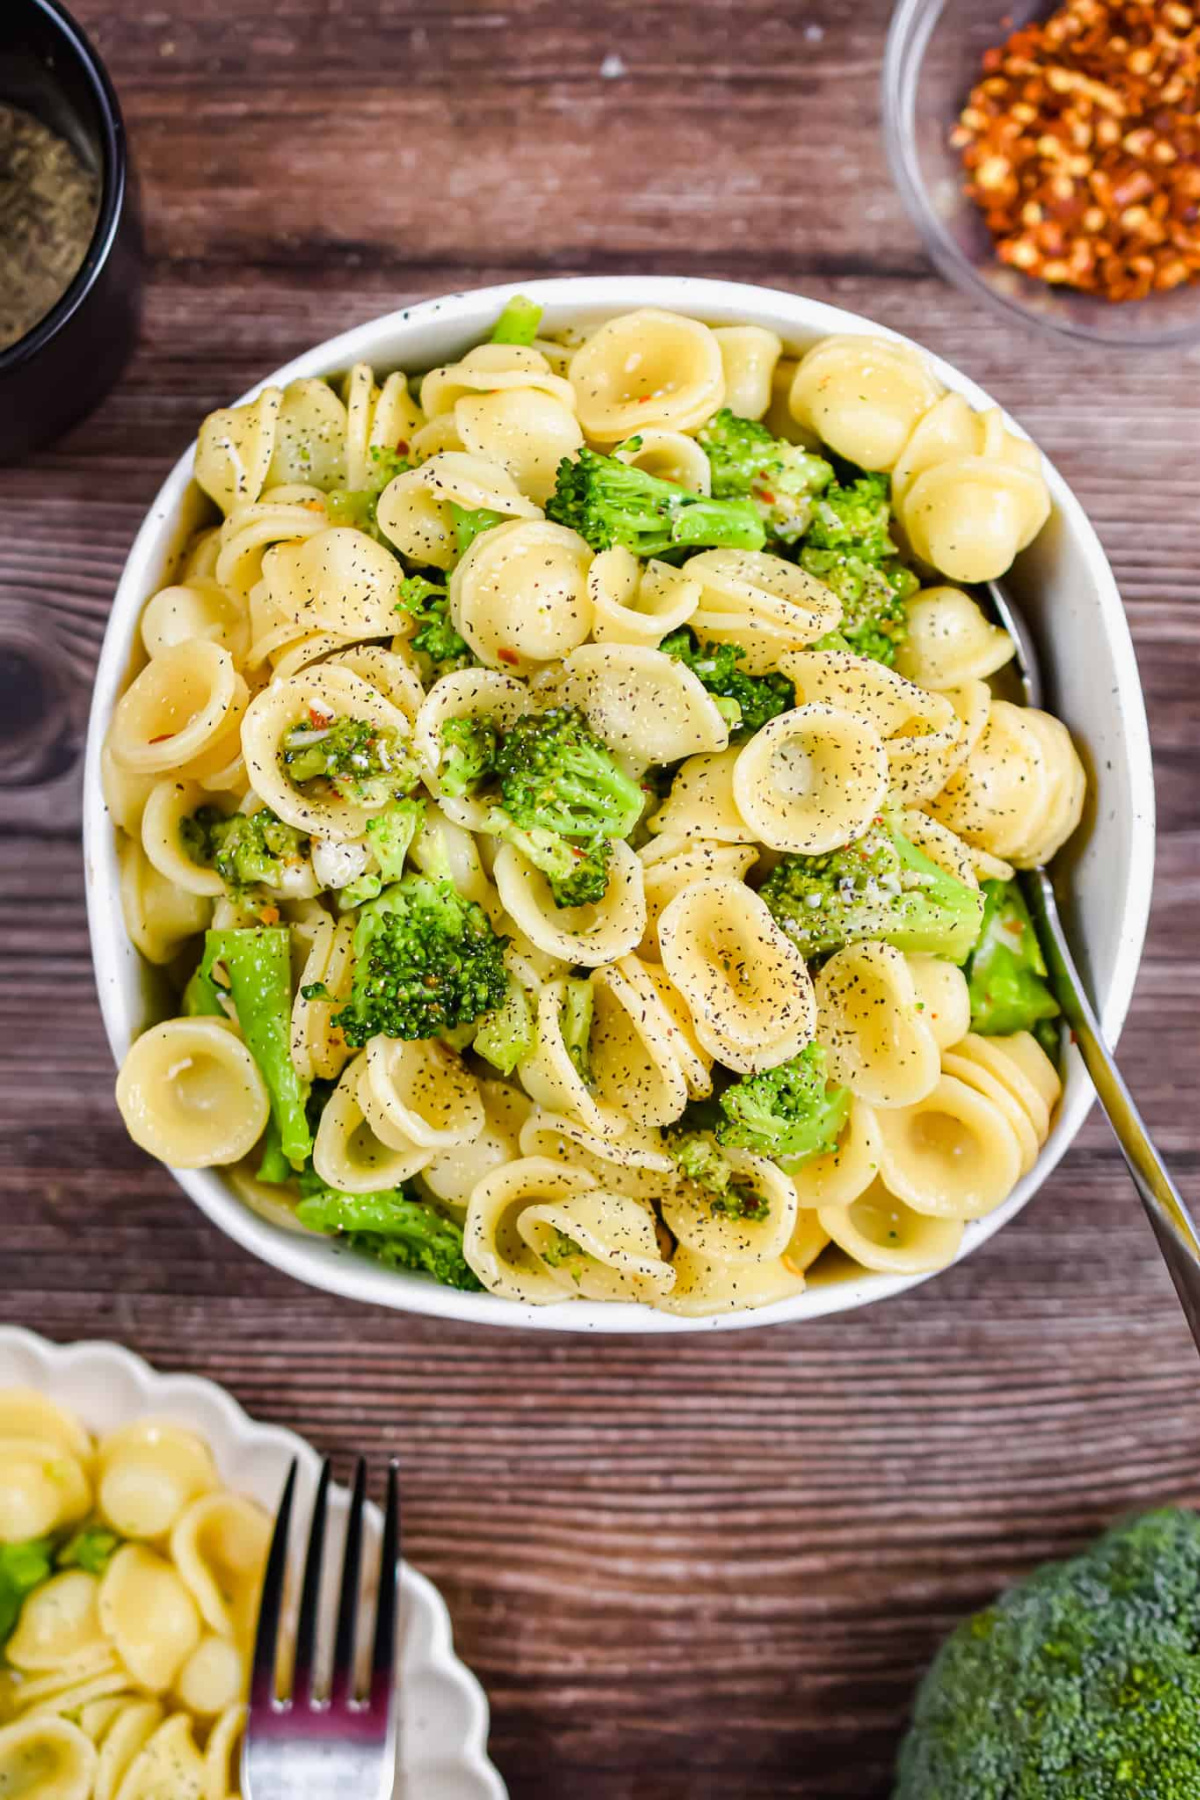 Italian Pasta with Broccoli